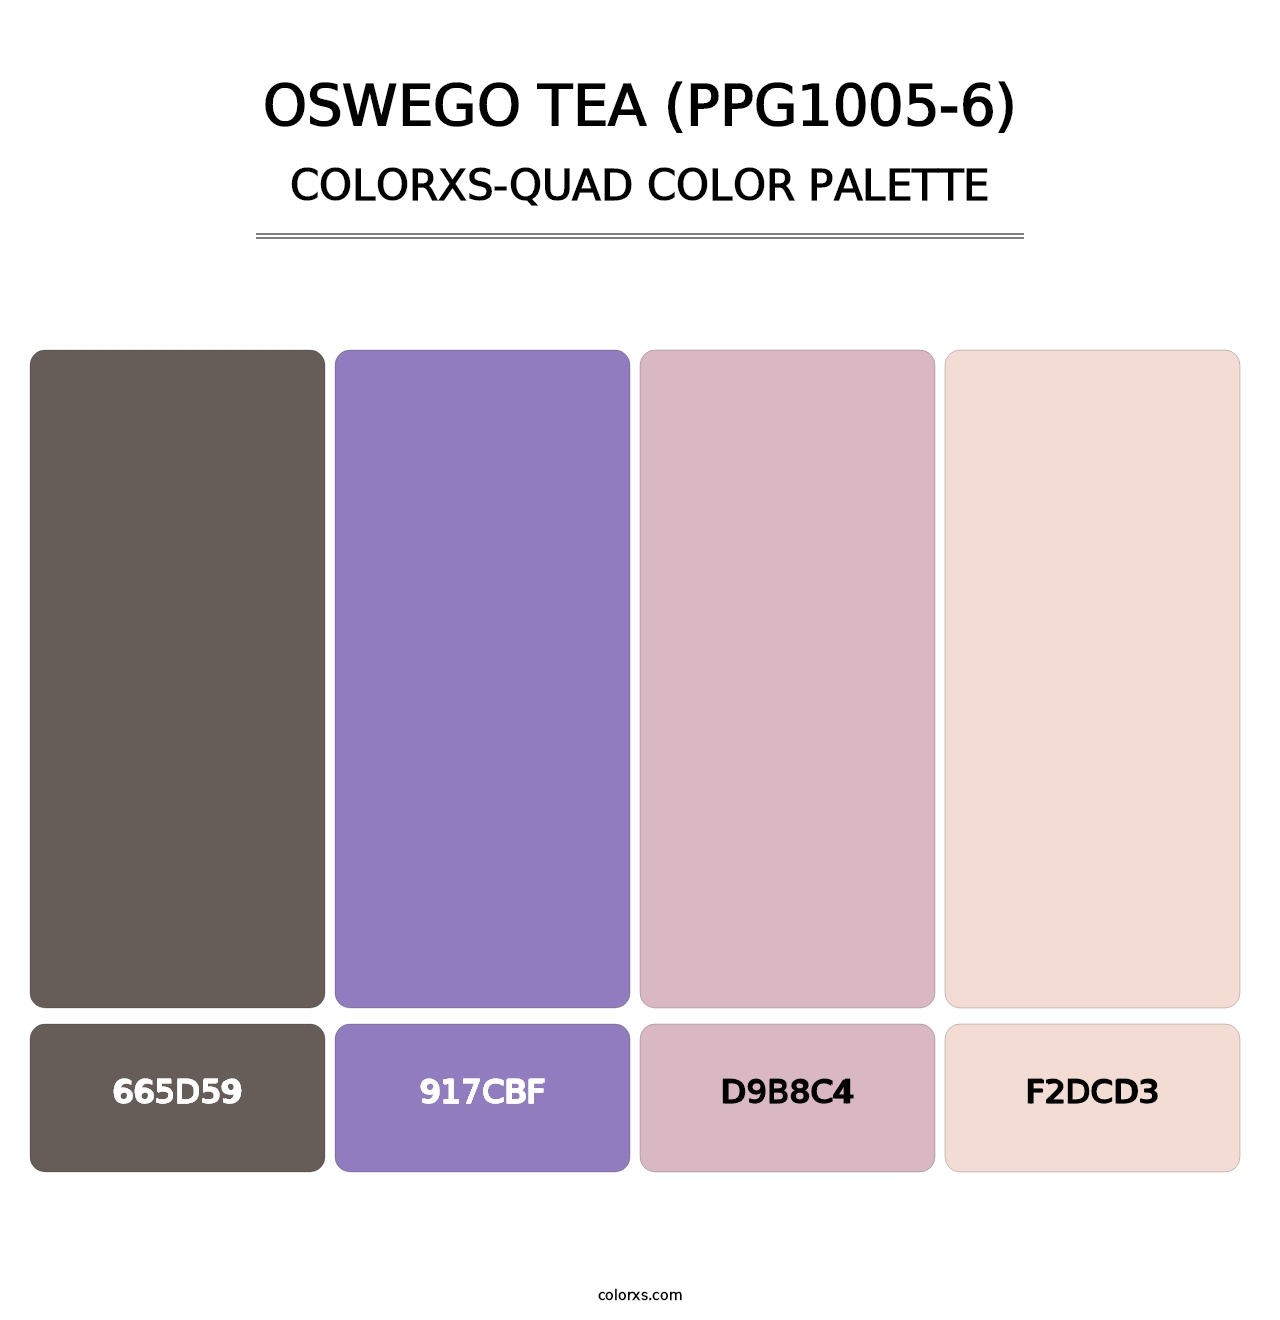 Oswego Tea (PPG1005-6) - Colorxs Quad Palette